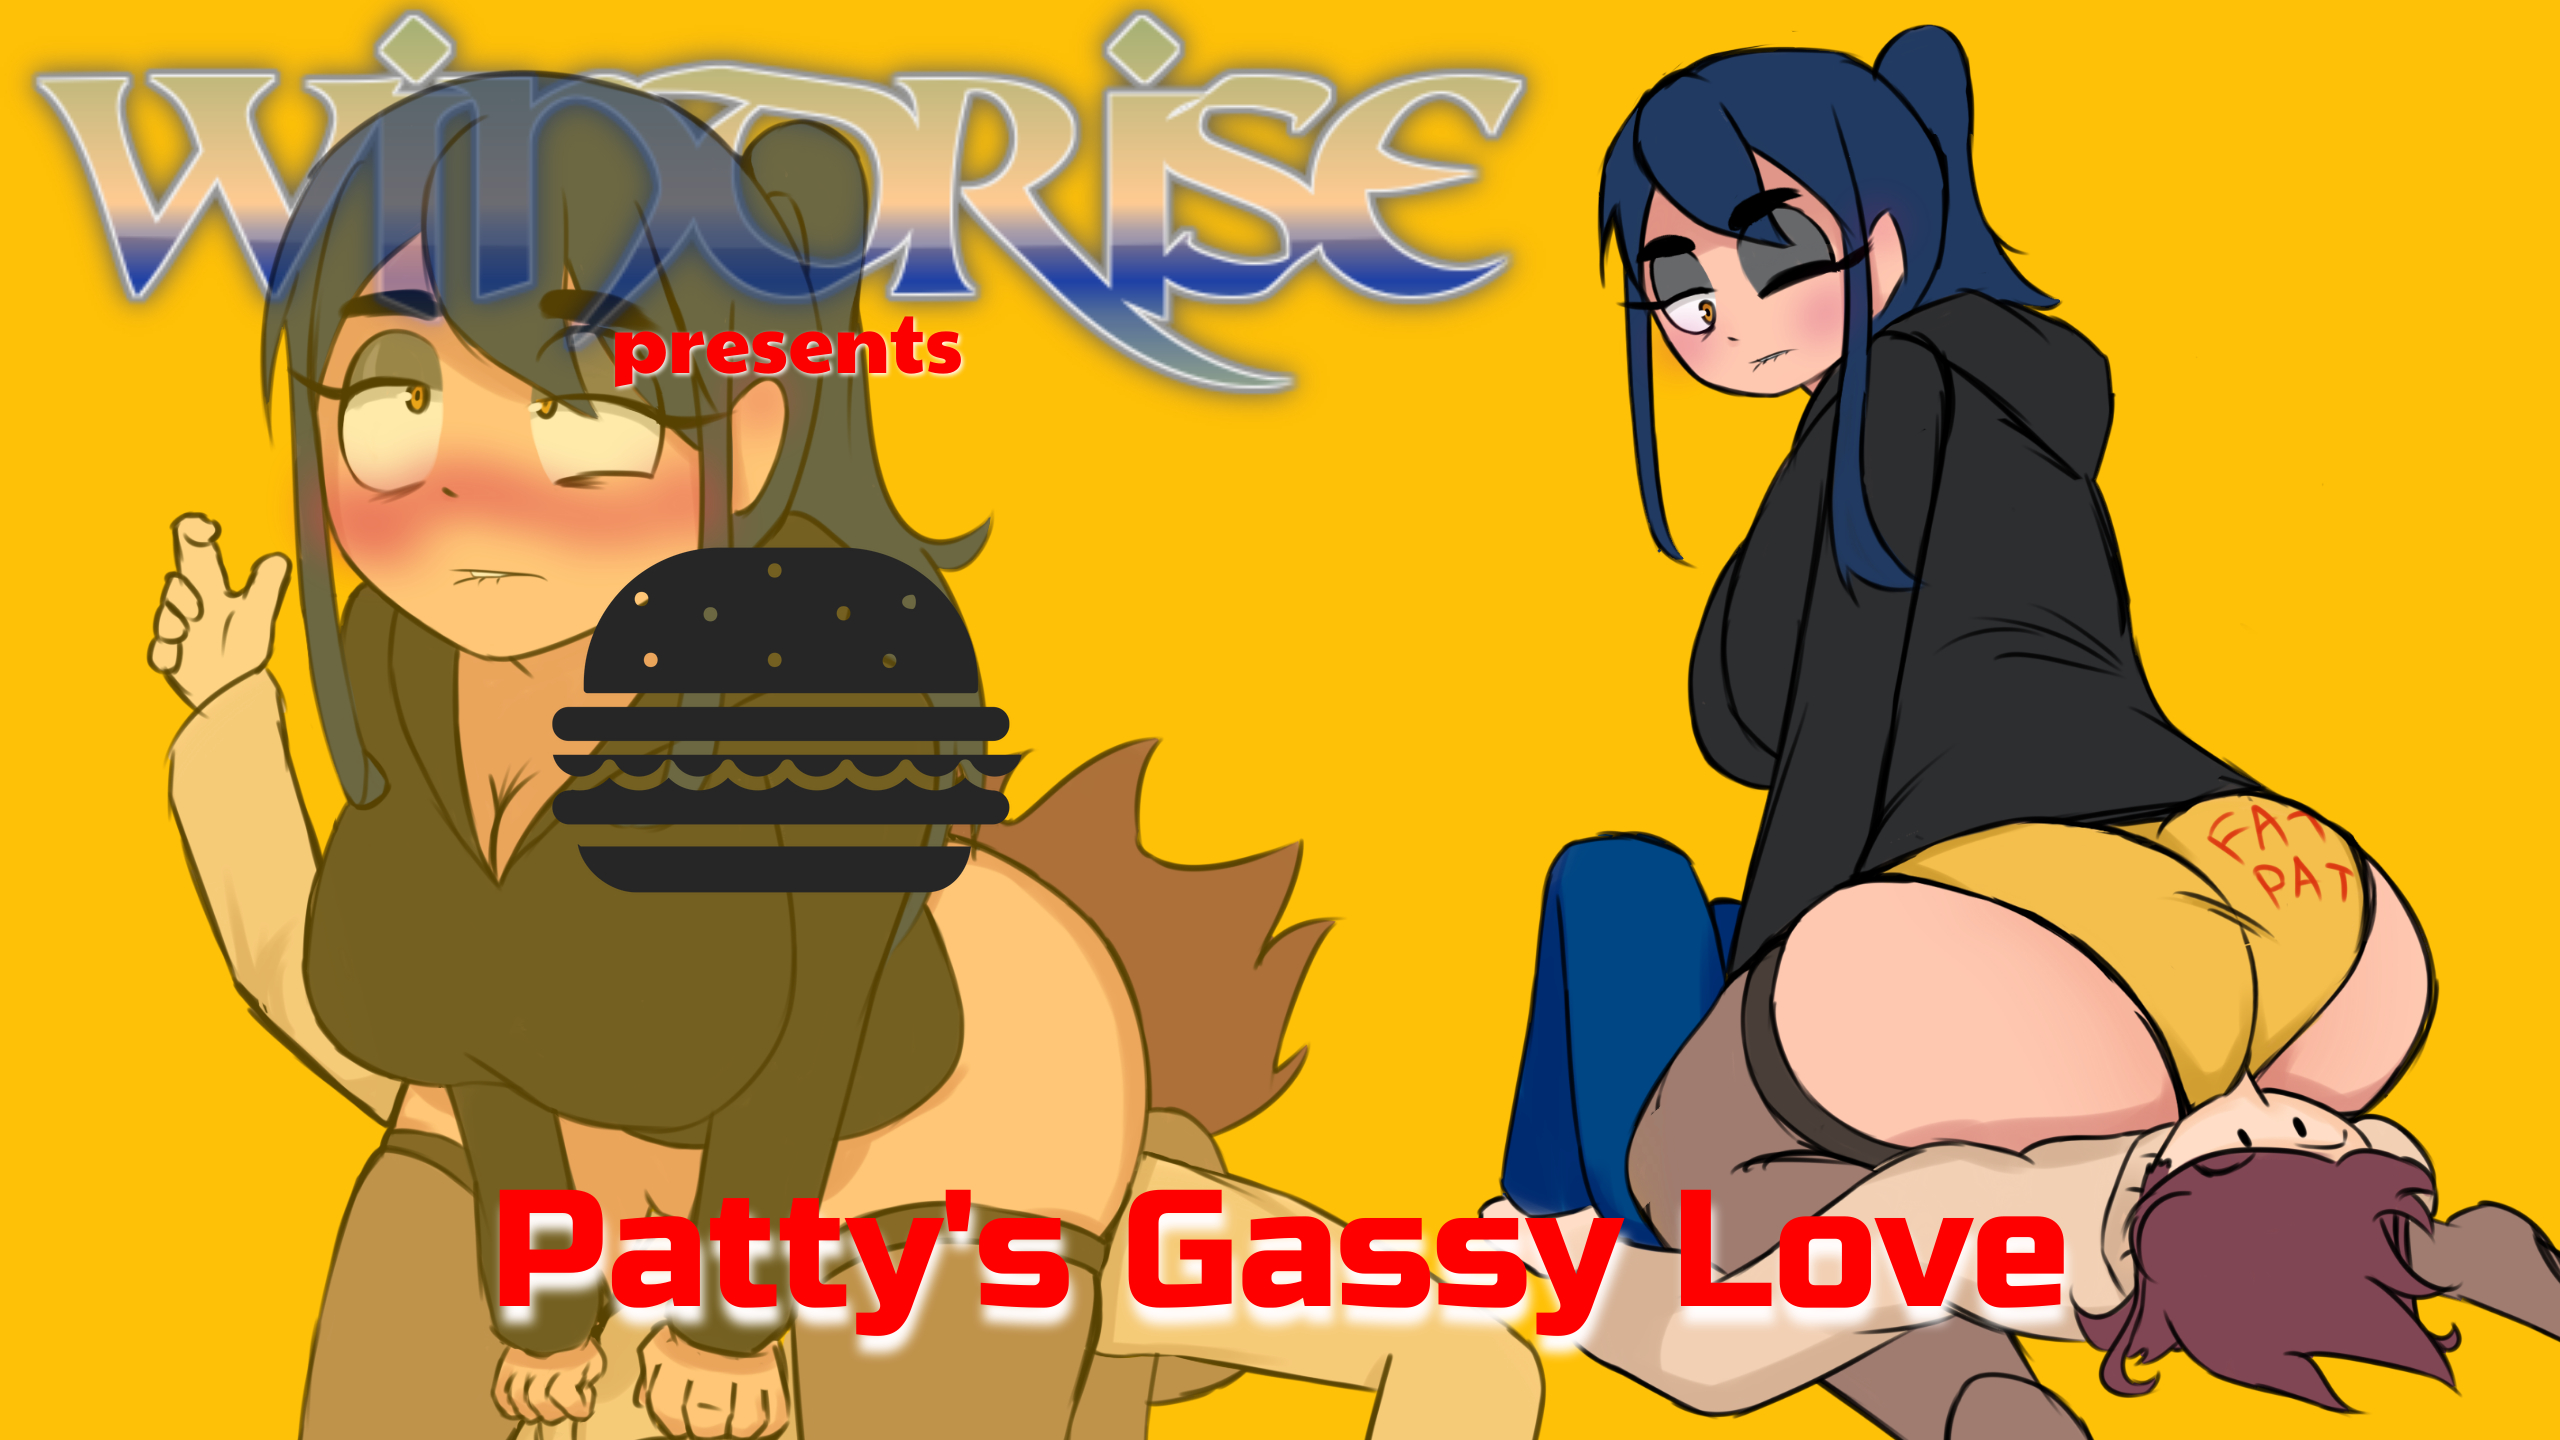 Patty's Gassy Love